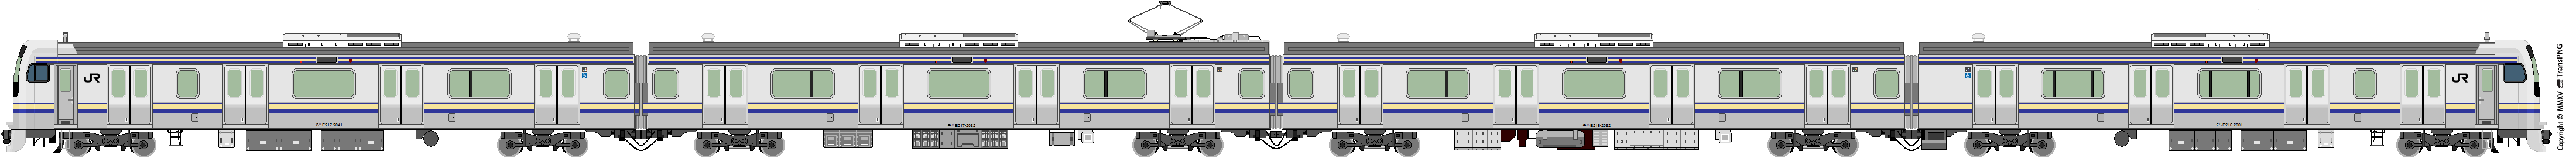 5016 - [5016] East Japan Railway 52162607543_0358efd388_o